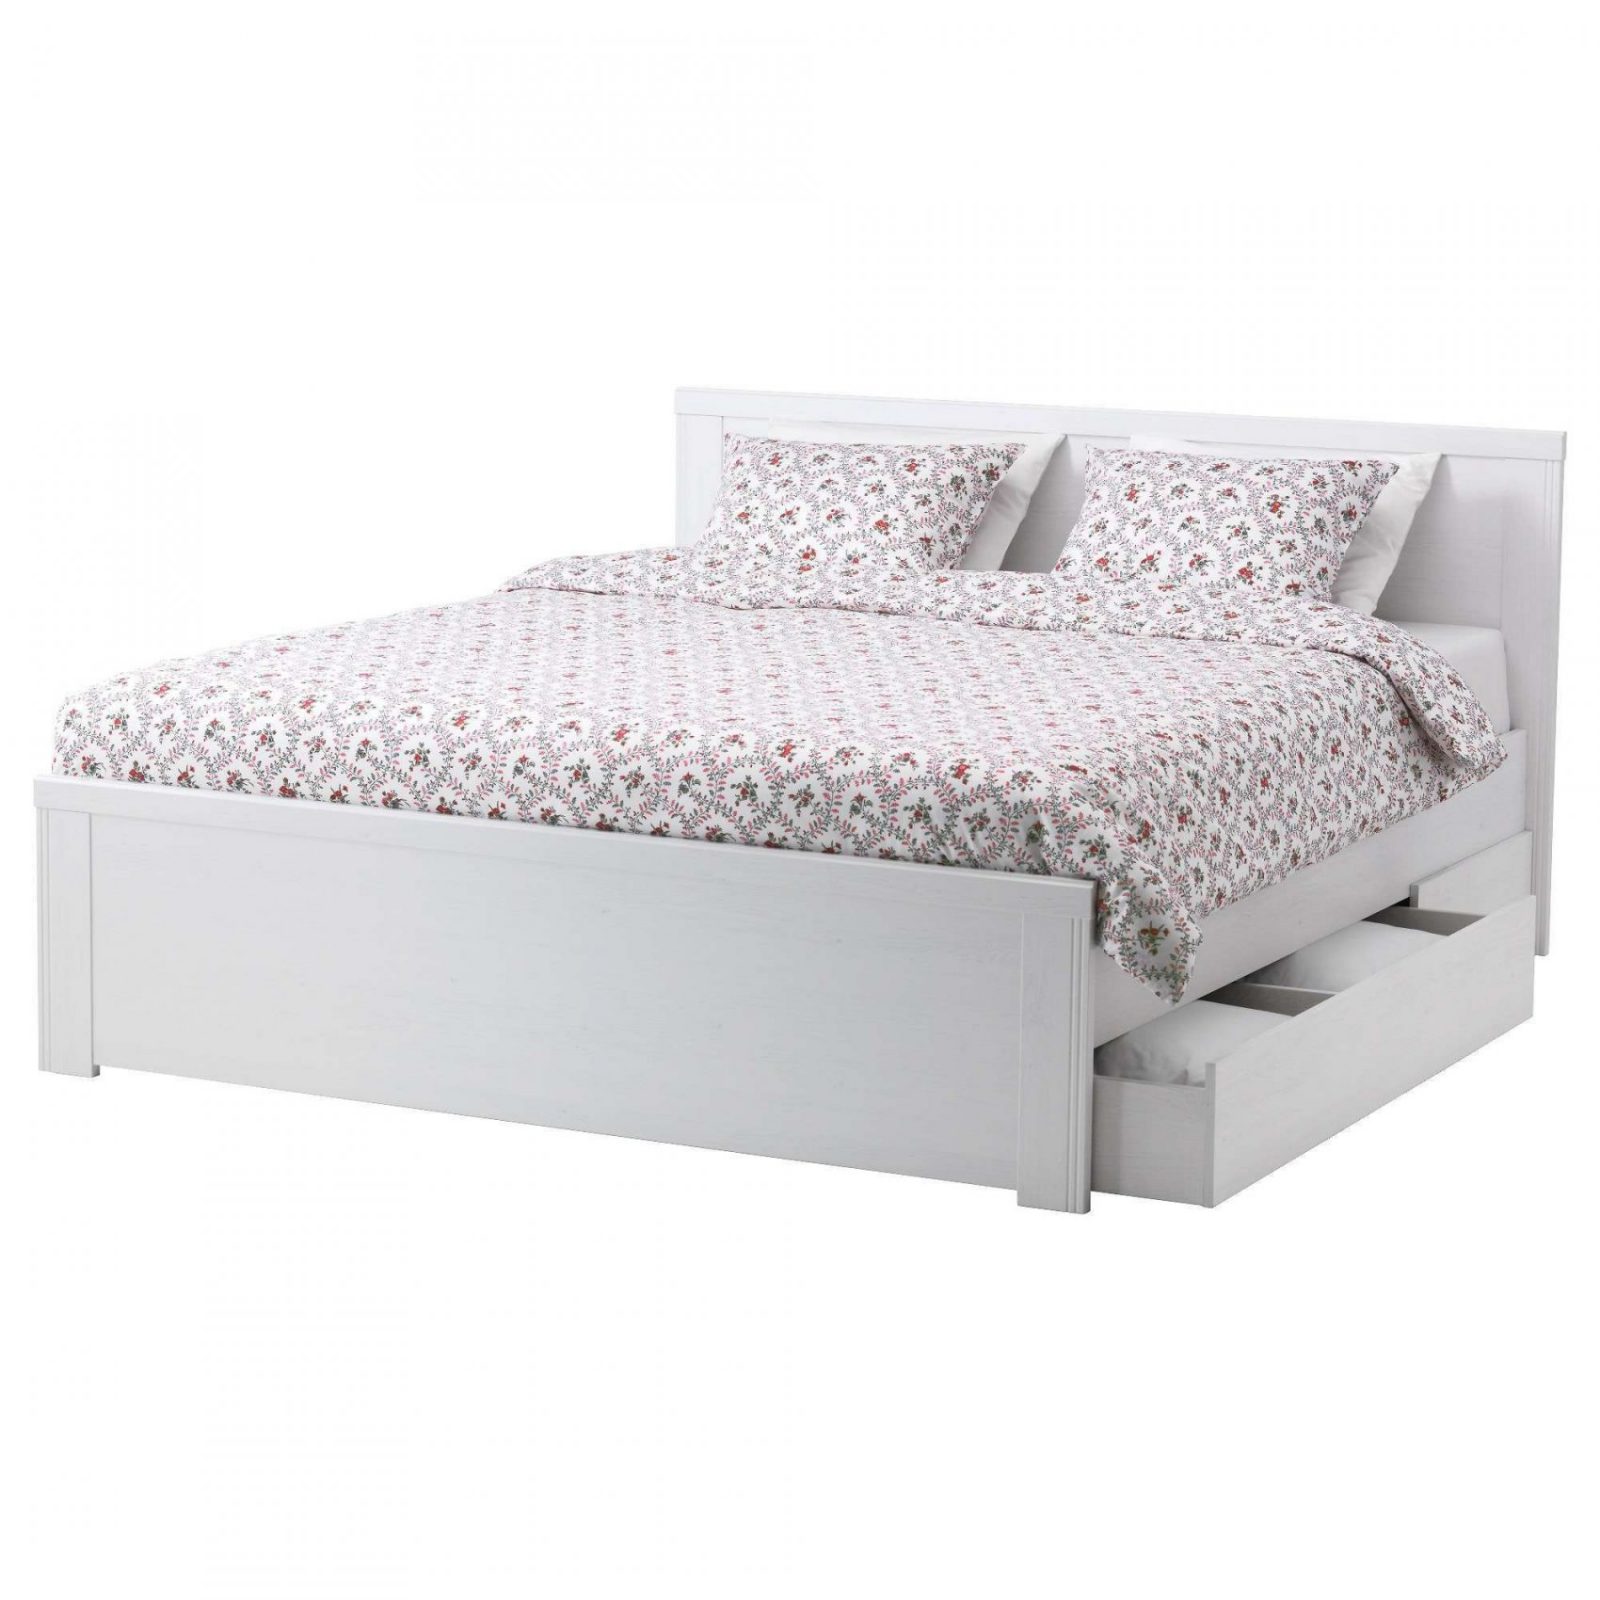 Ikea Schlafzimmer Betten Elegant 32 Kollektion Bett Ikea 140—200 Pic von Bett Weiß 140X200 Ikea Bild